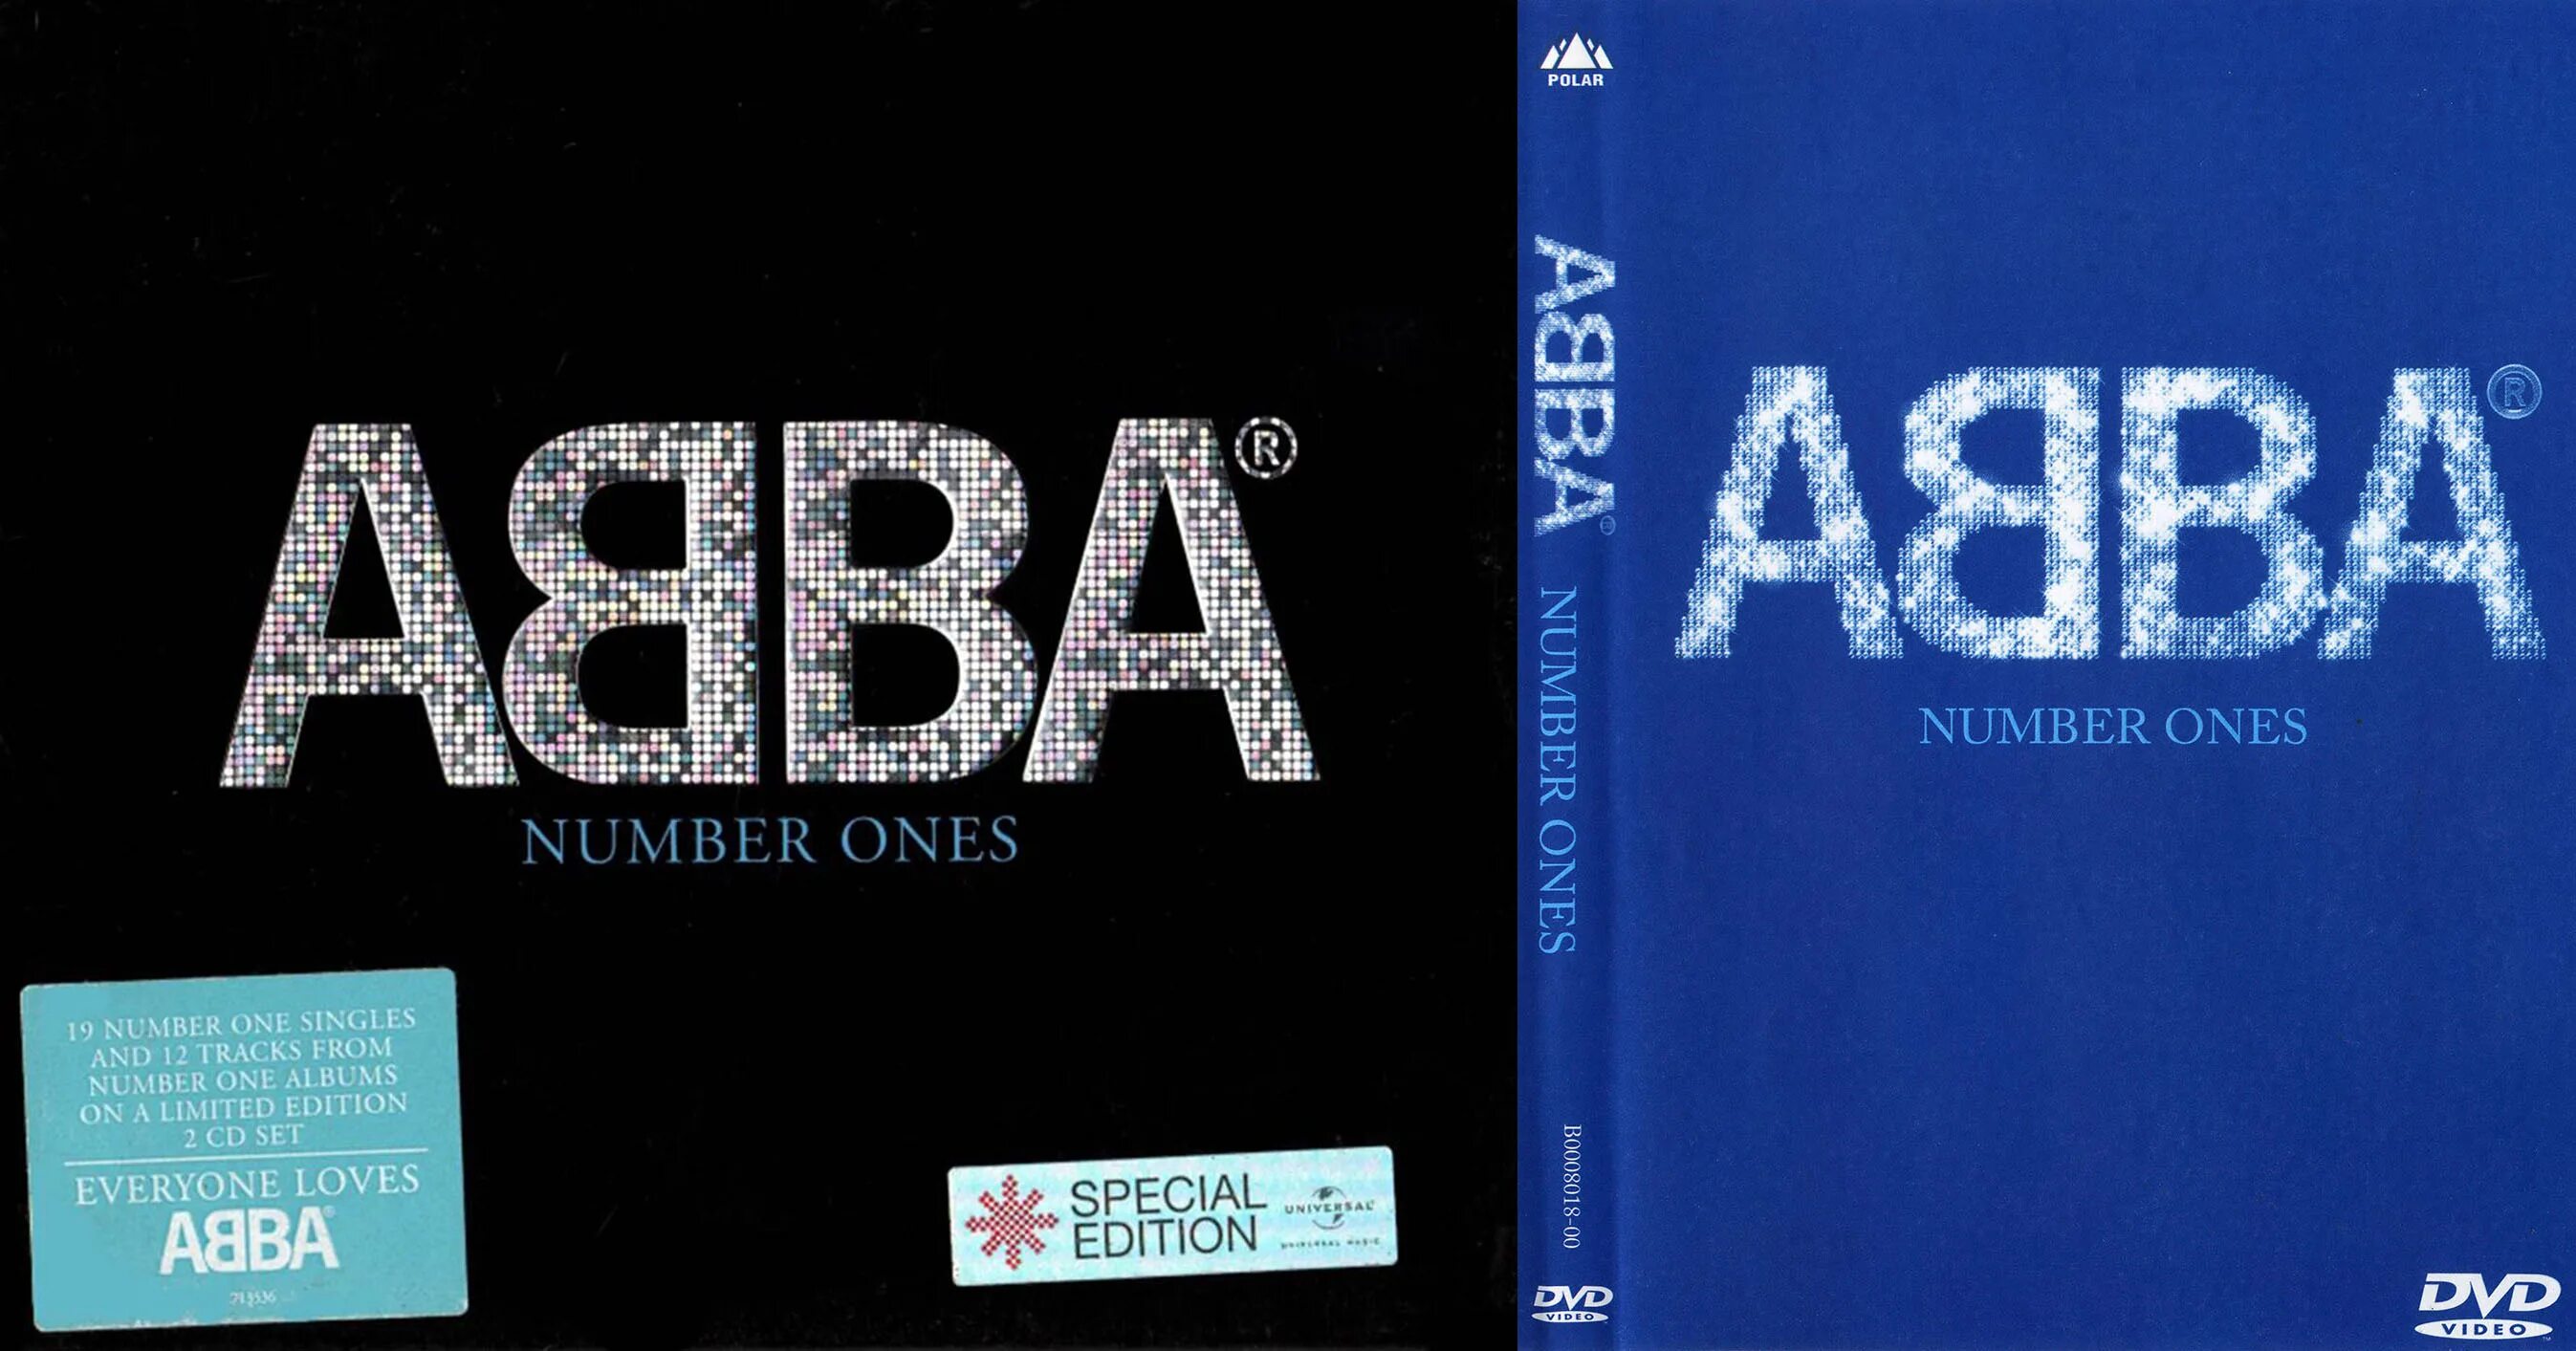 Песня my number. ABBA - Special Edition обложка. ABBA - Special Edition 2005 обложка. ABBA number ones [DVD] 2006. ABBA Voyage 2021 CD обложка.